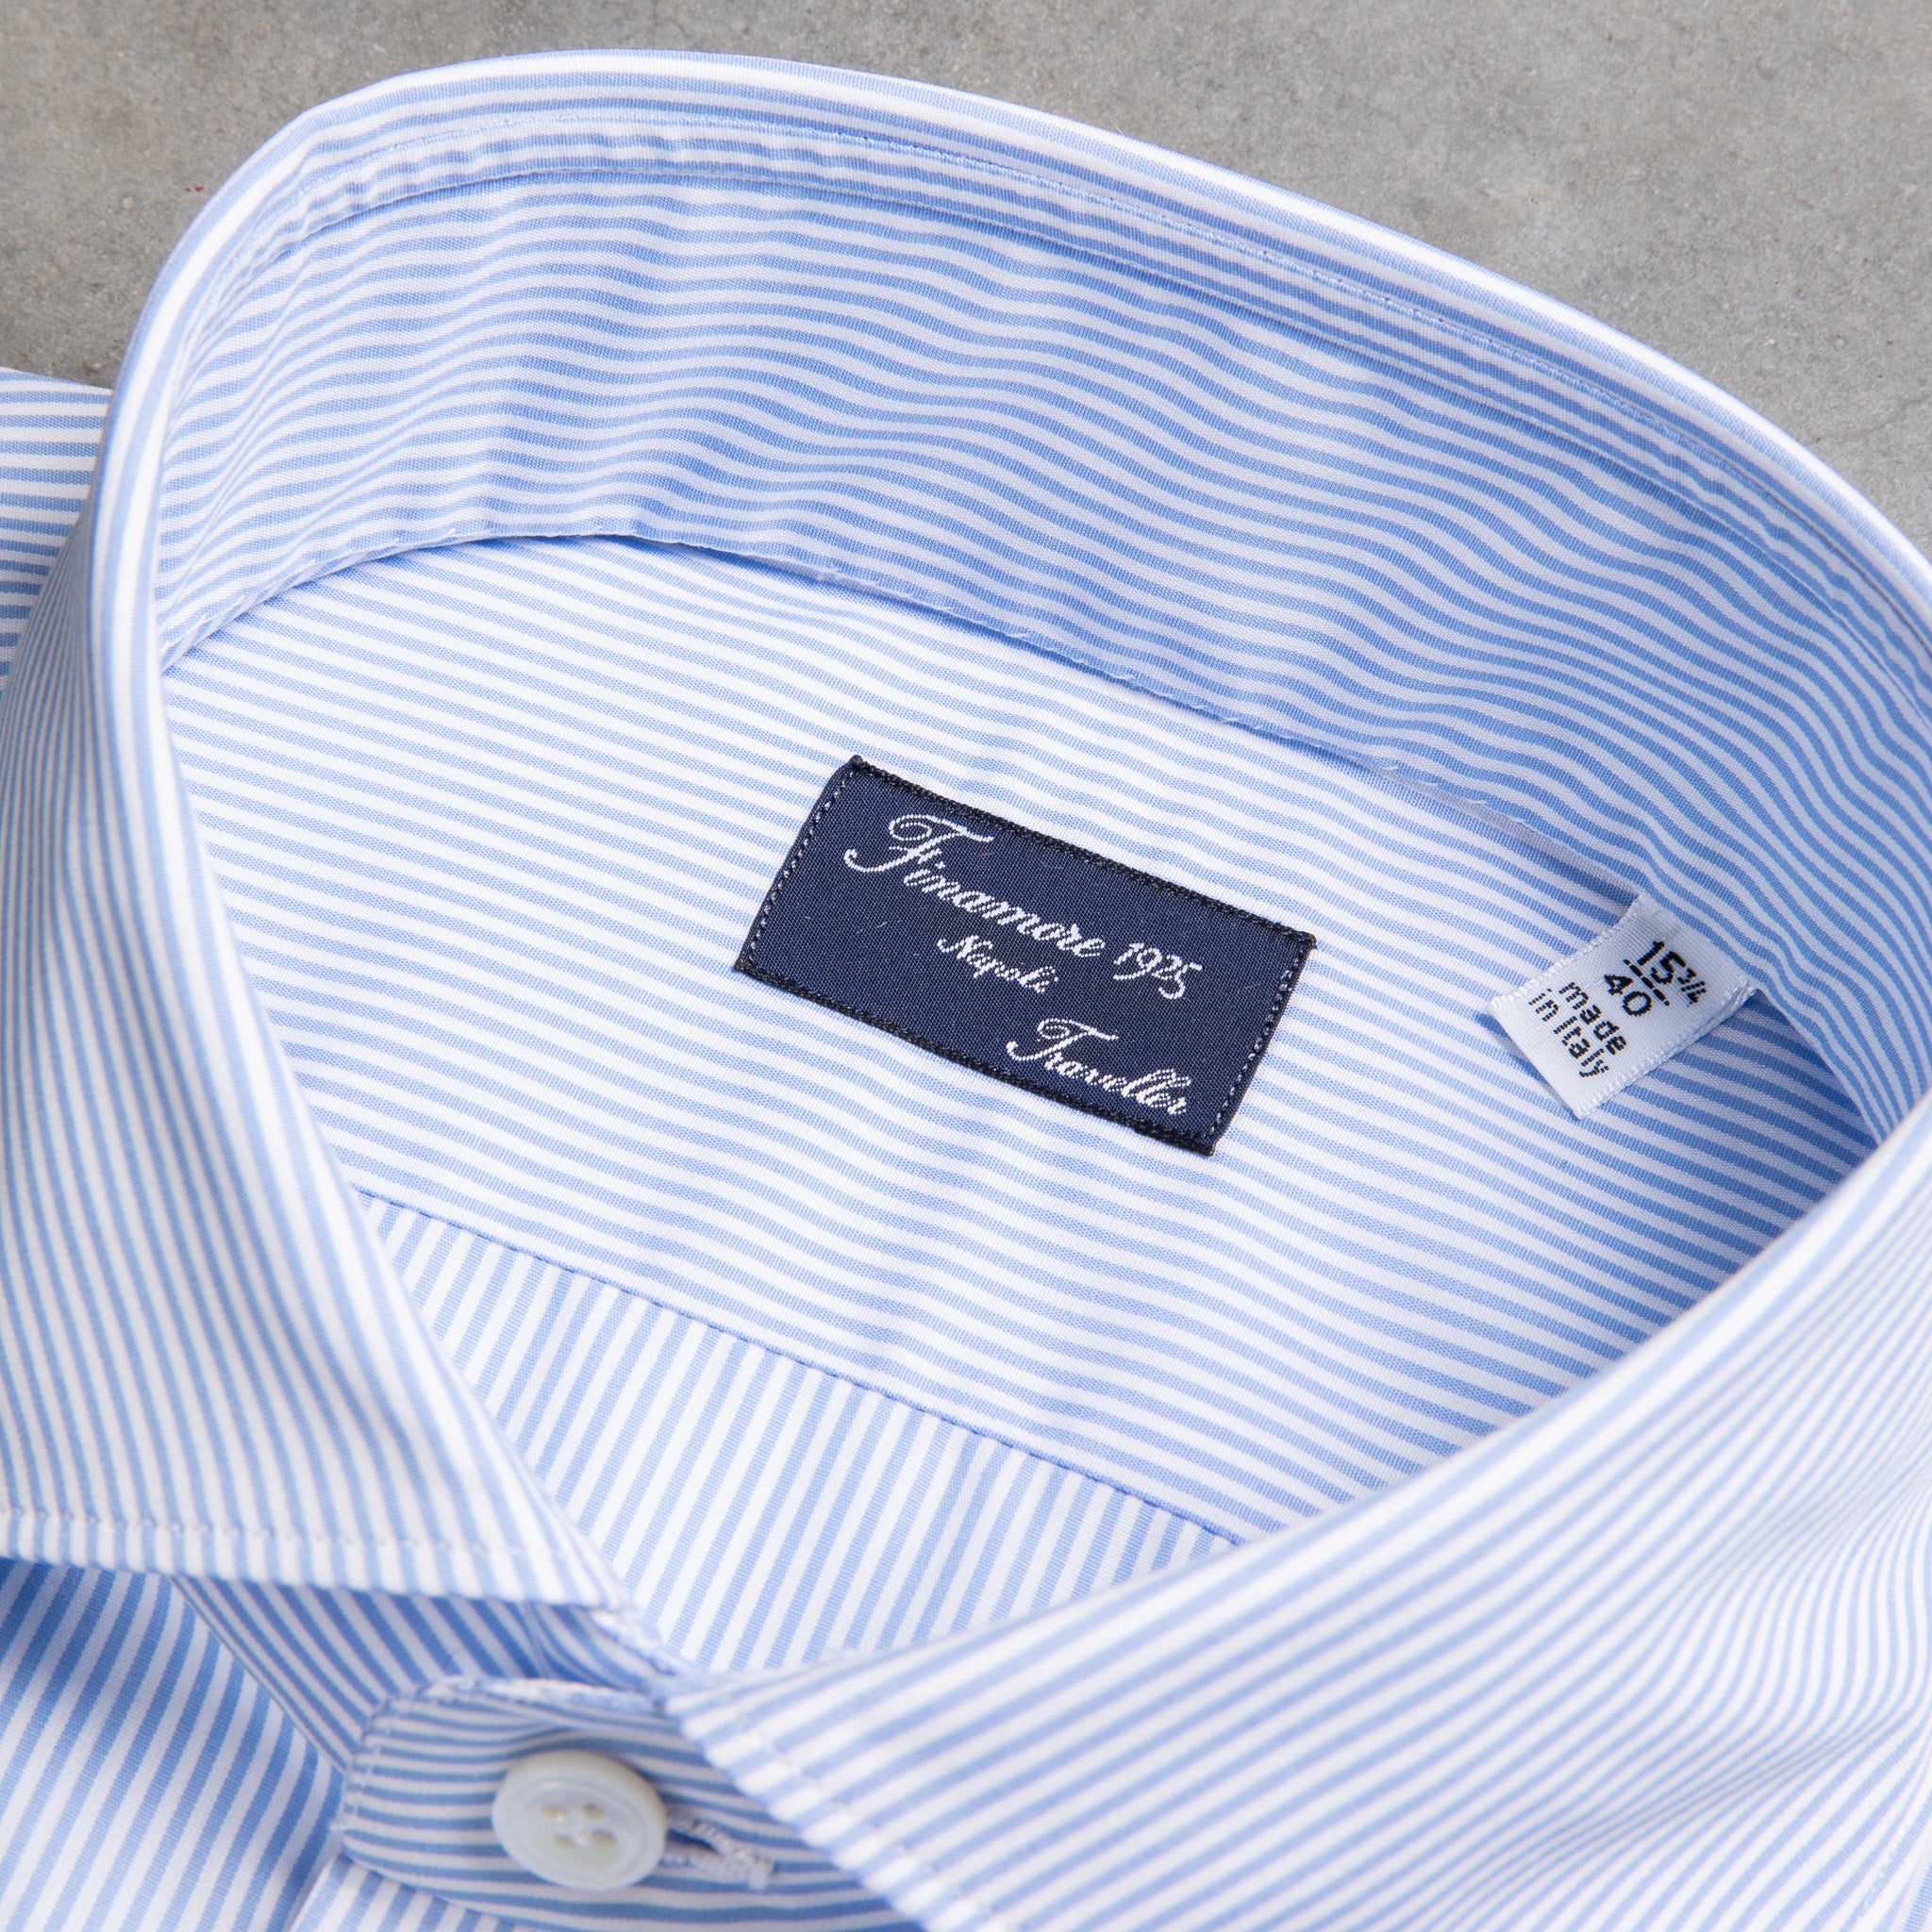 Finamore &quot;Traveller&quot; shirt Milano fit collar eduardo light blue stripe